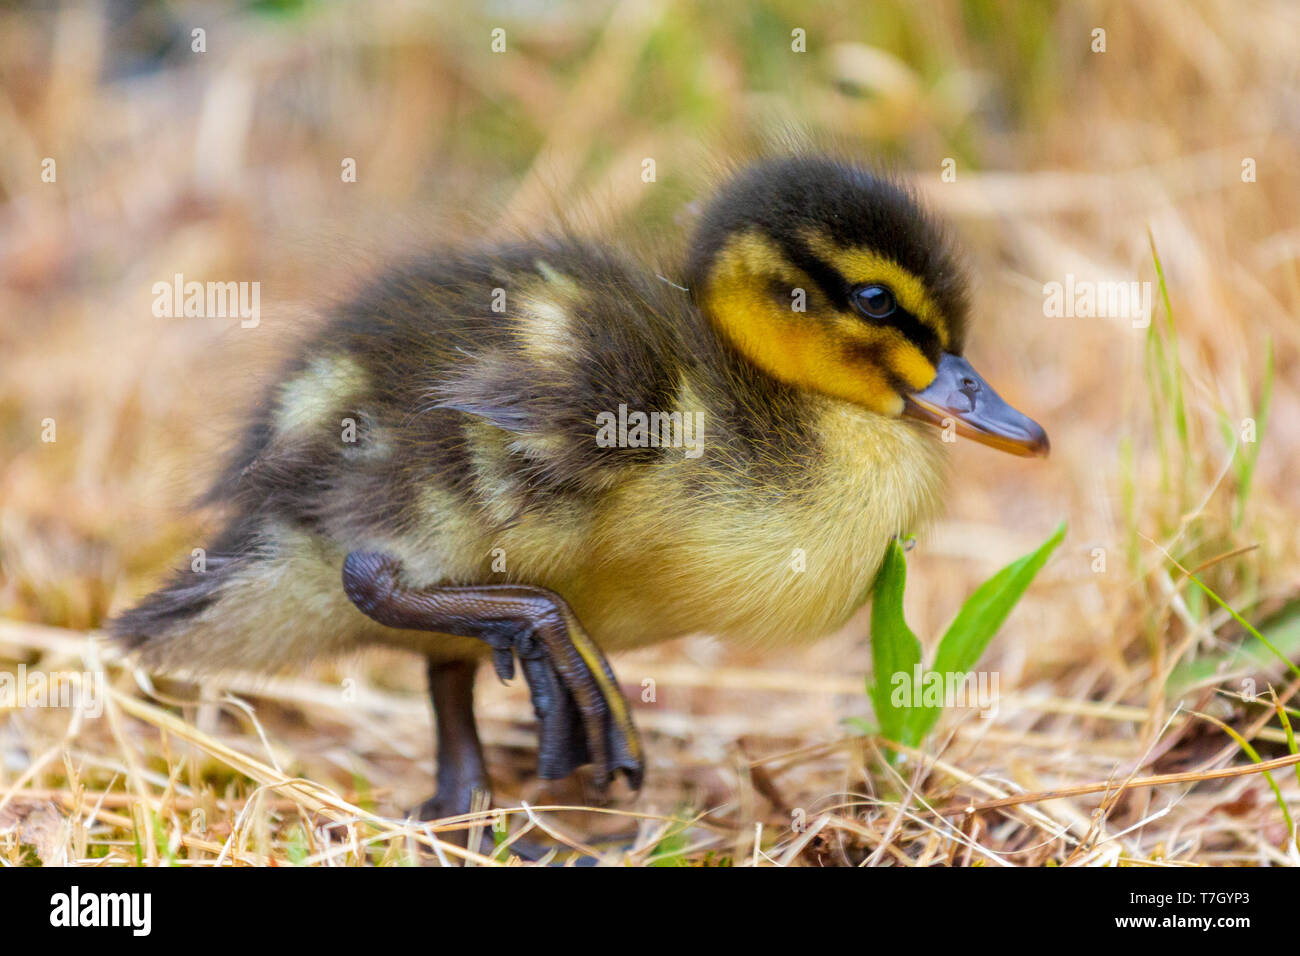 Cute Innocent Yellow Duckling Stock Photo